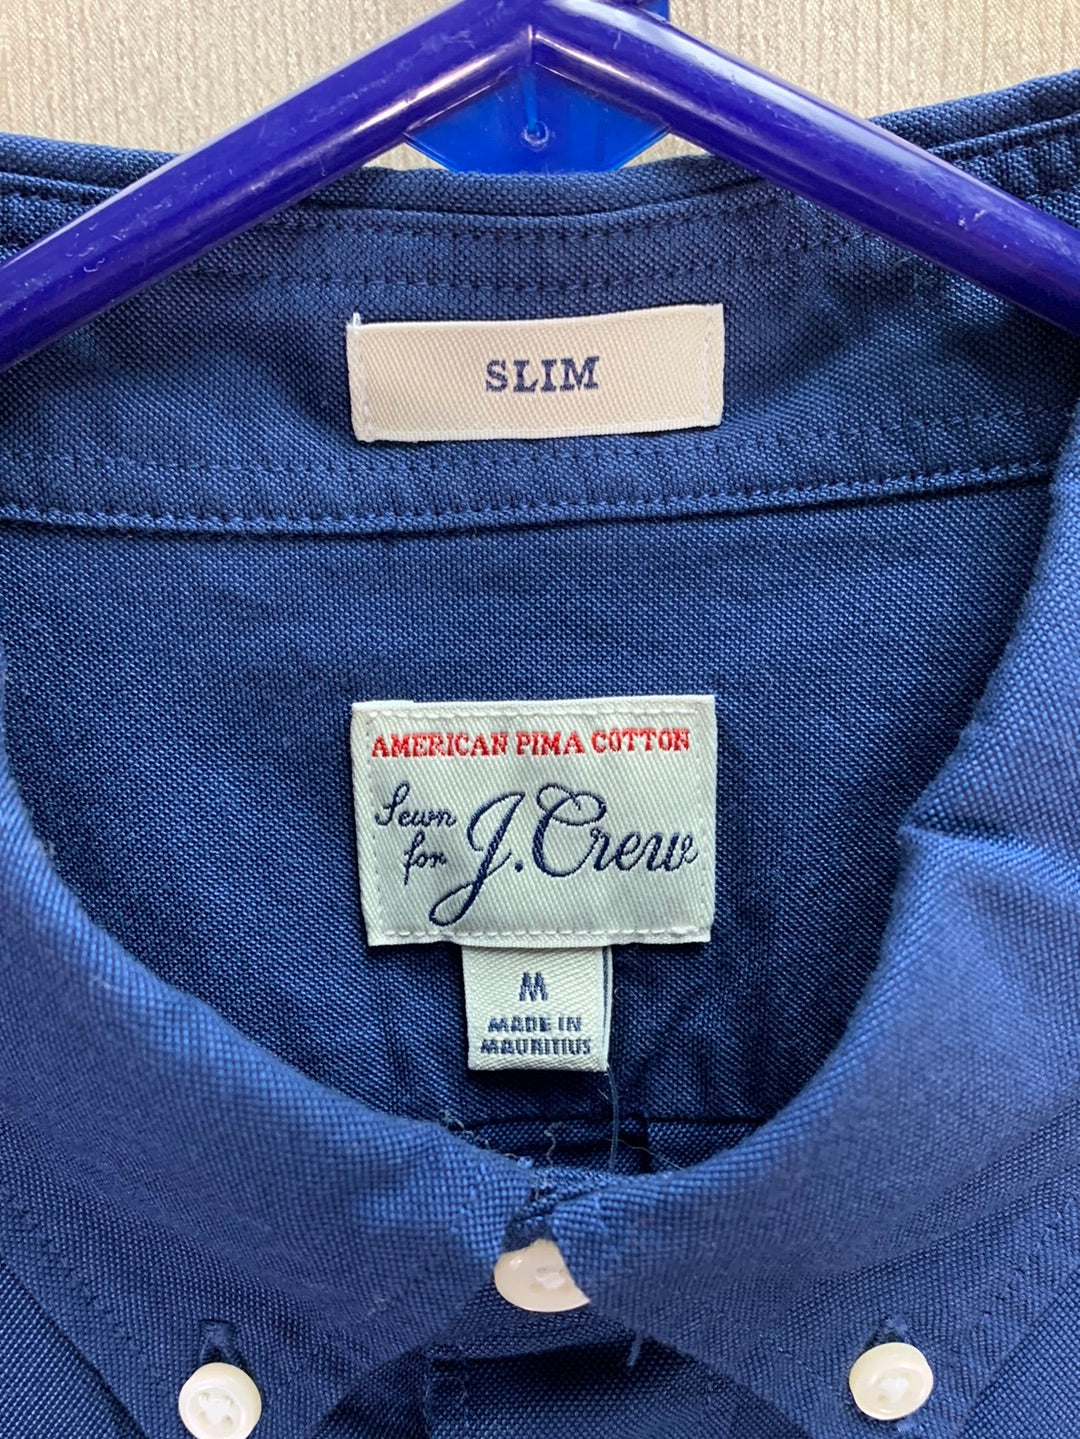 NWT - J. CREW dark blue American Pima Cotton Slim Button Down Shirt - M